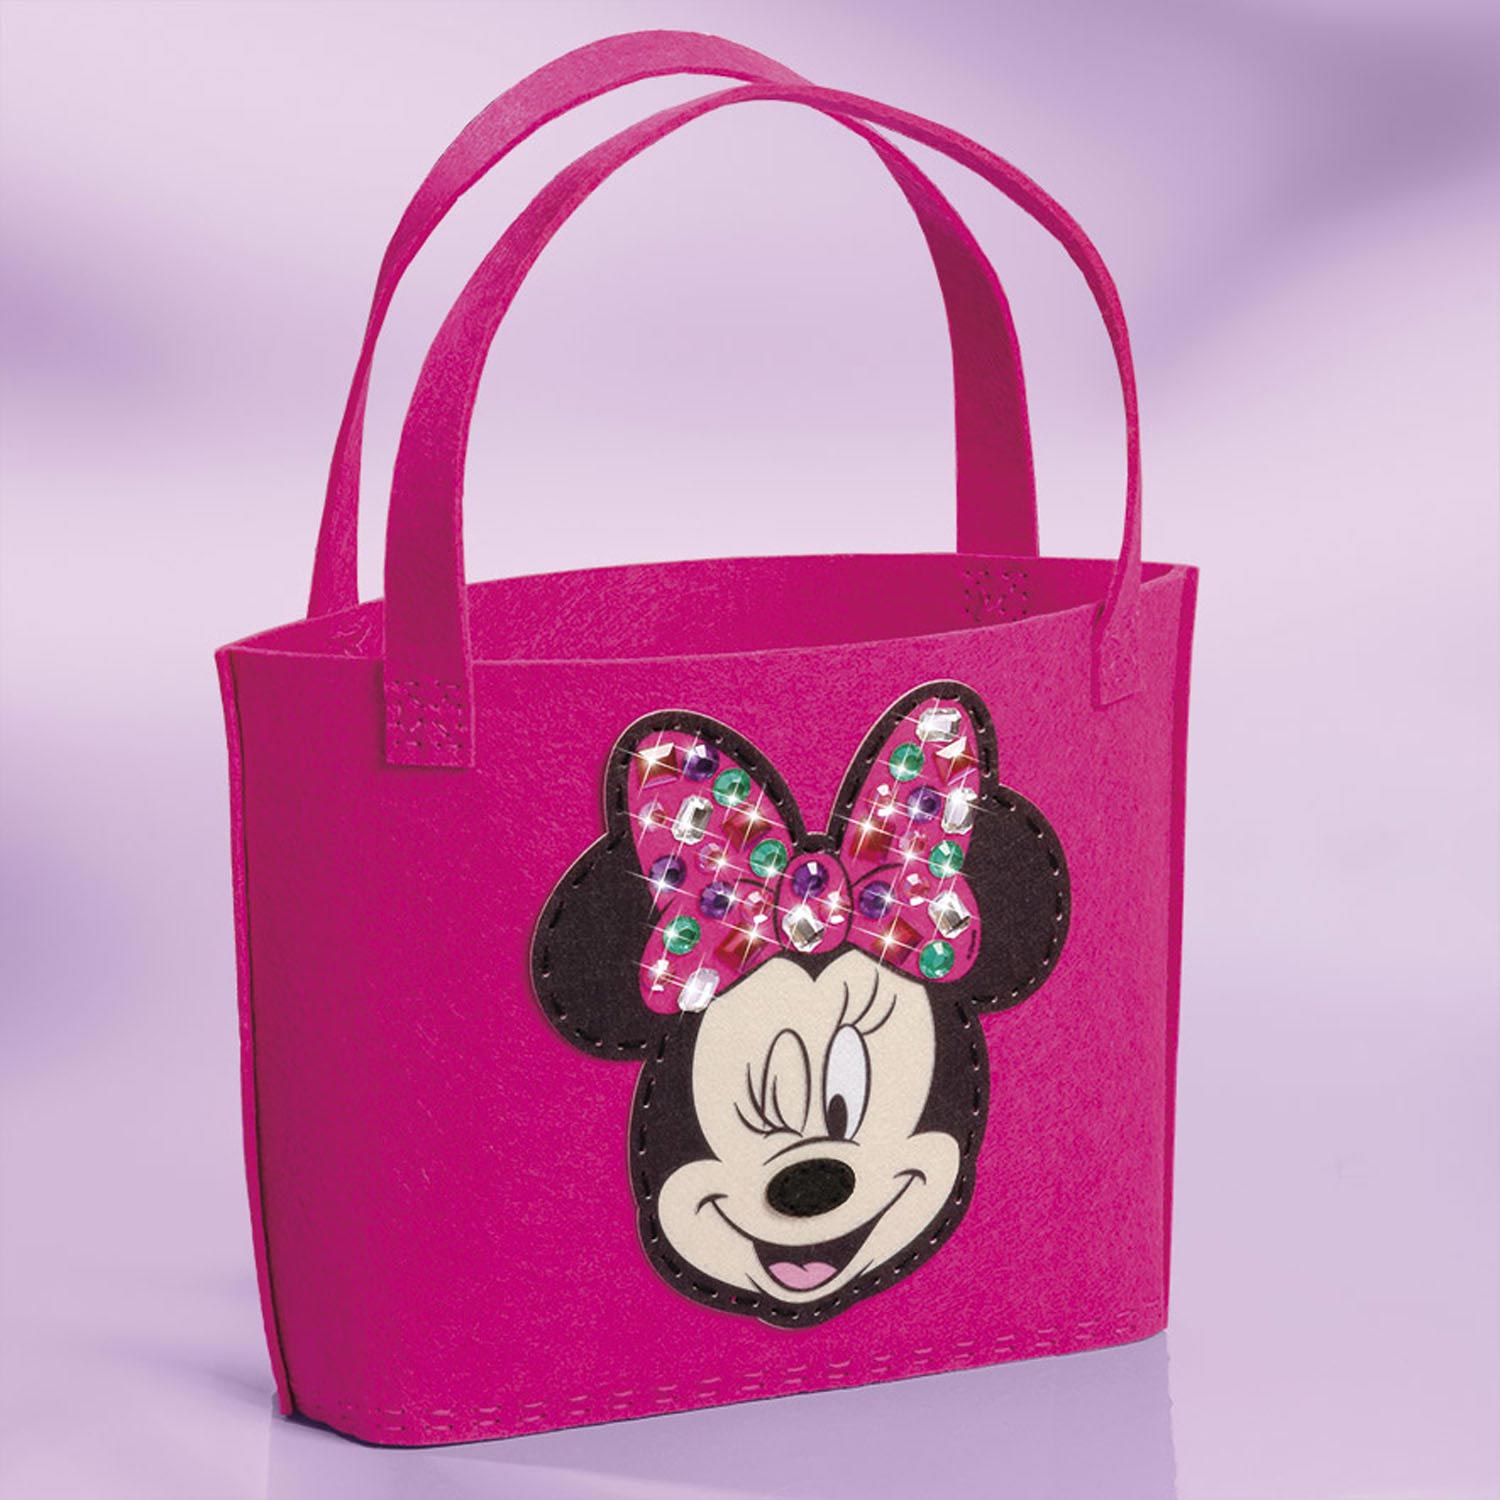 Totum Minnie Mouse - Maak je eigen Vilten Tas